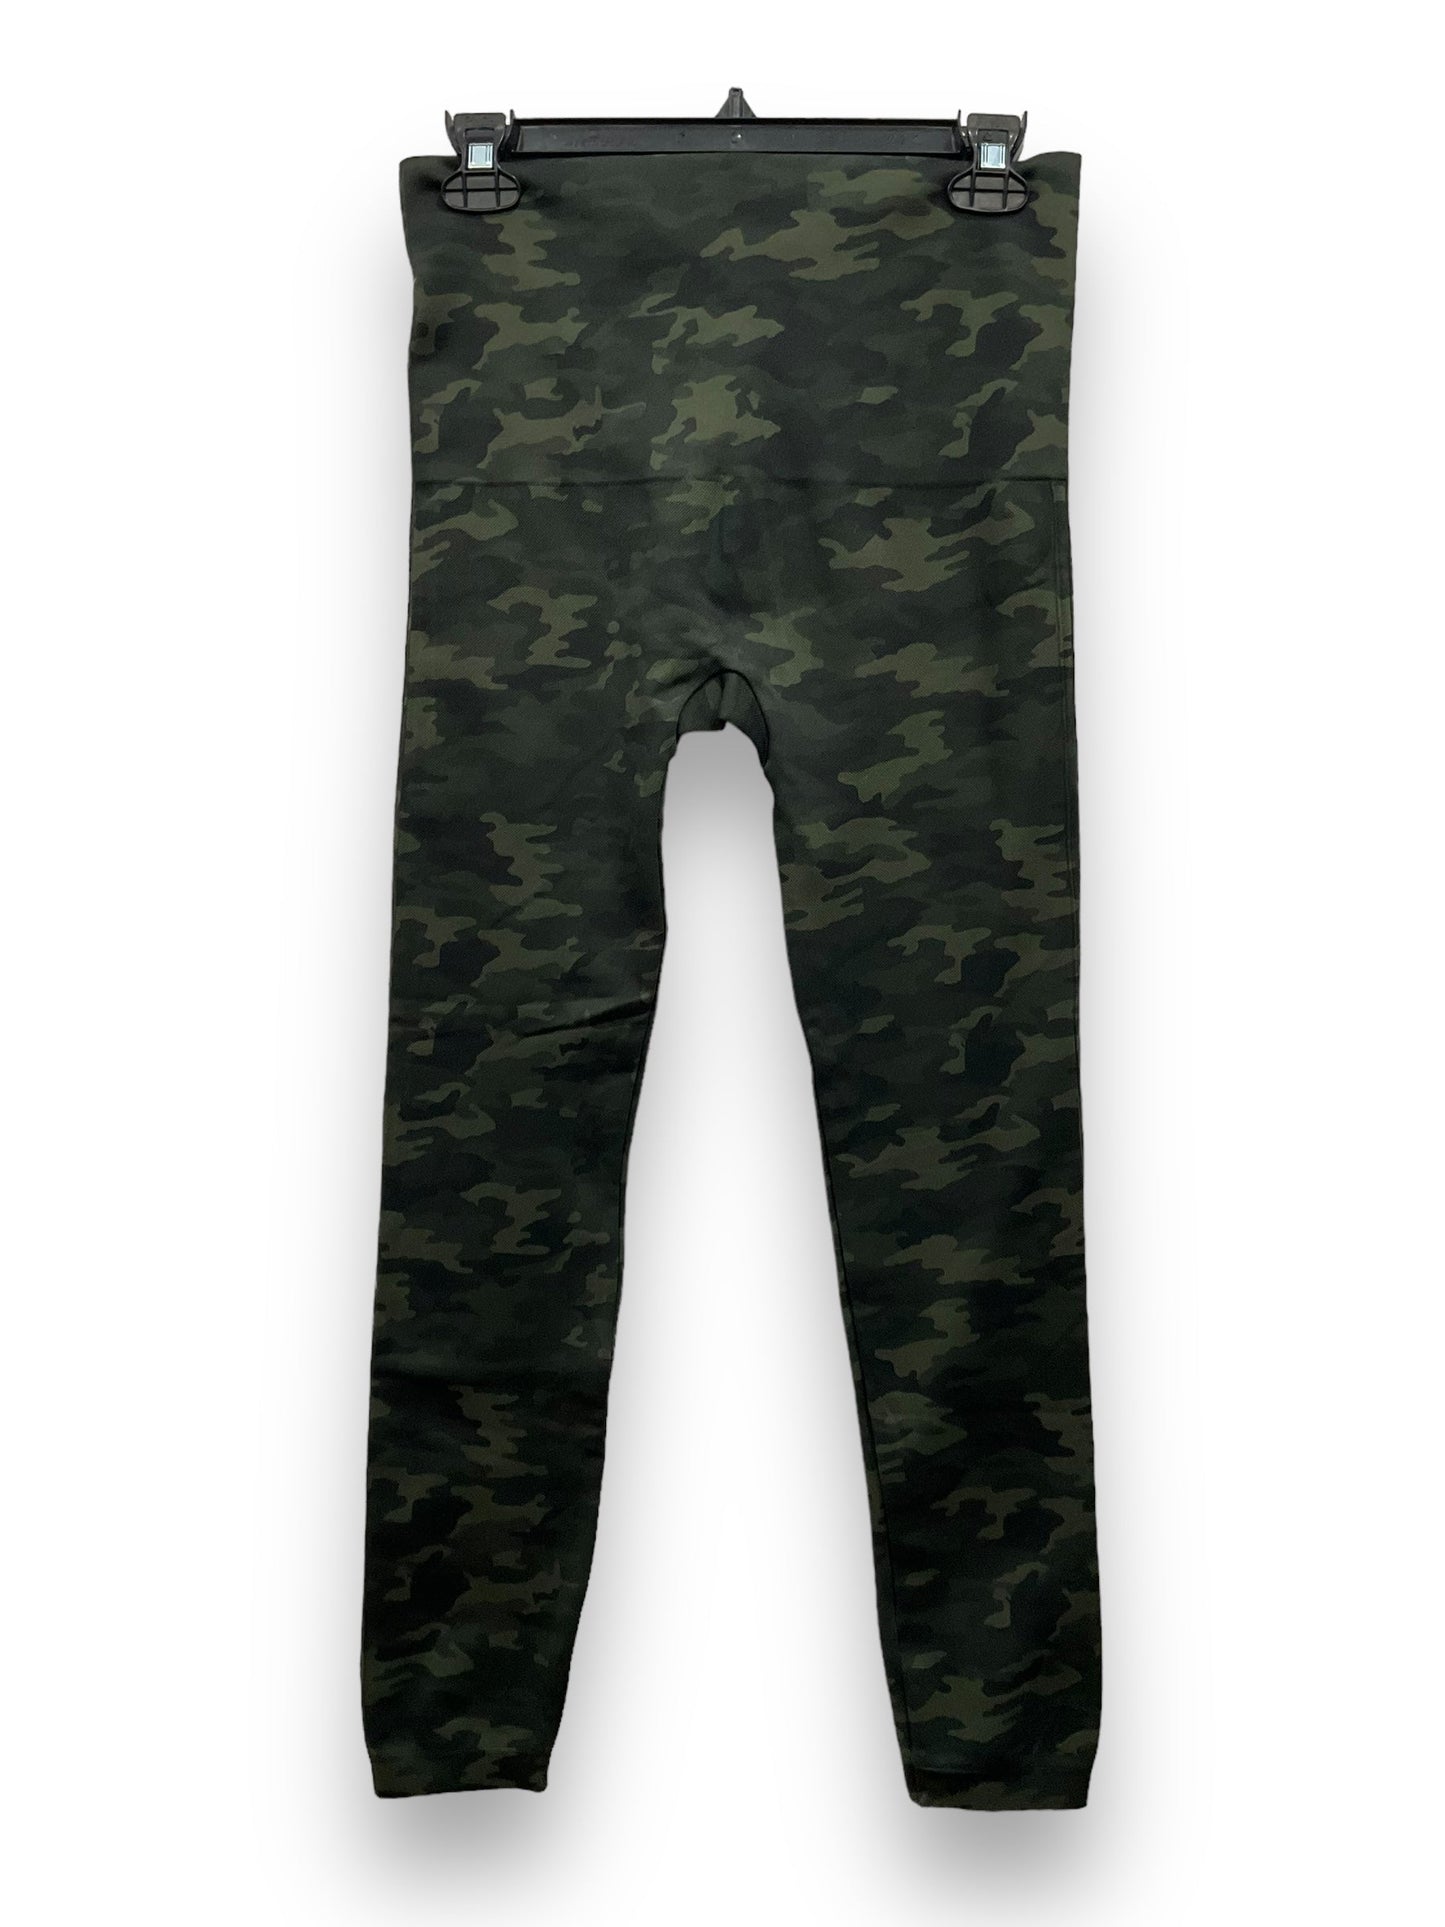 Camouflage Print Athletic Leggings Spanx, Size 1x